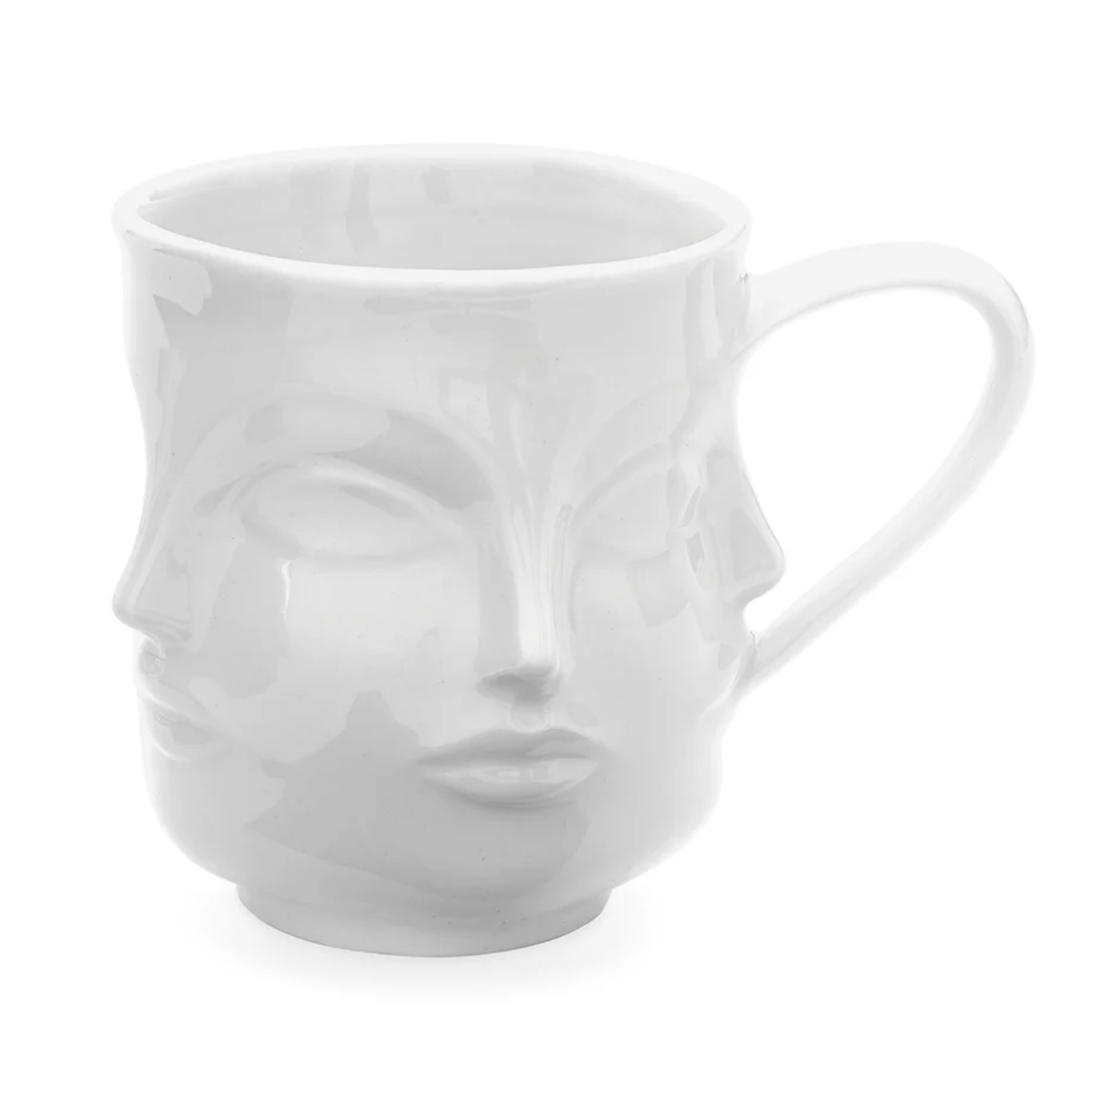 DORA MAAR cup made of porcelain